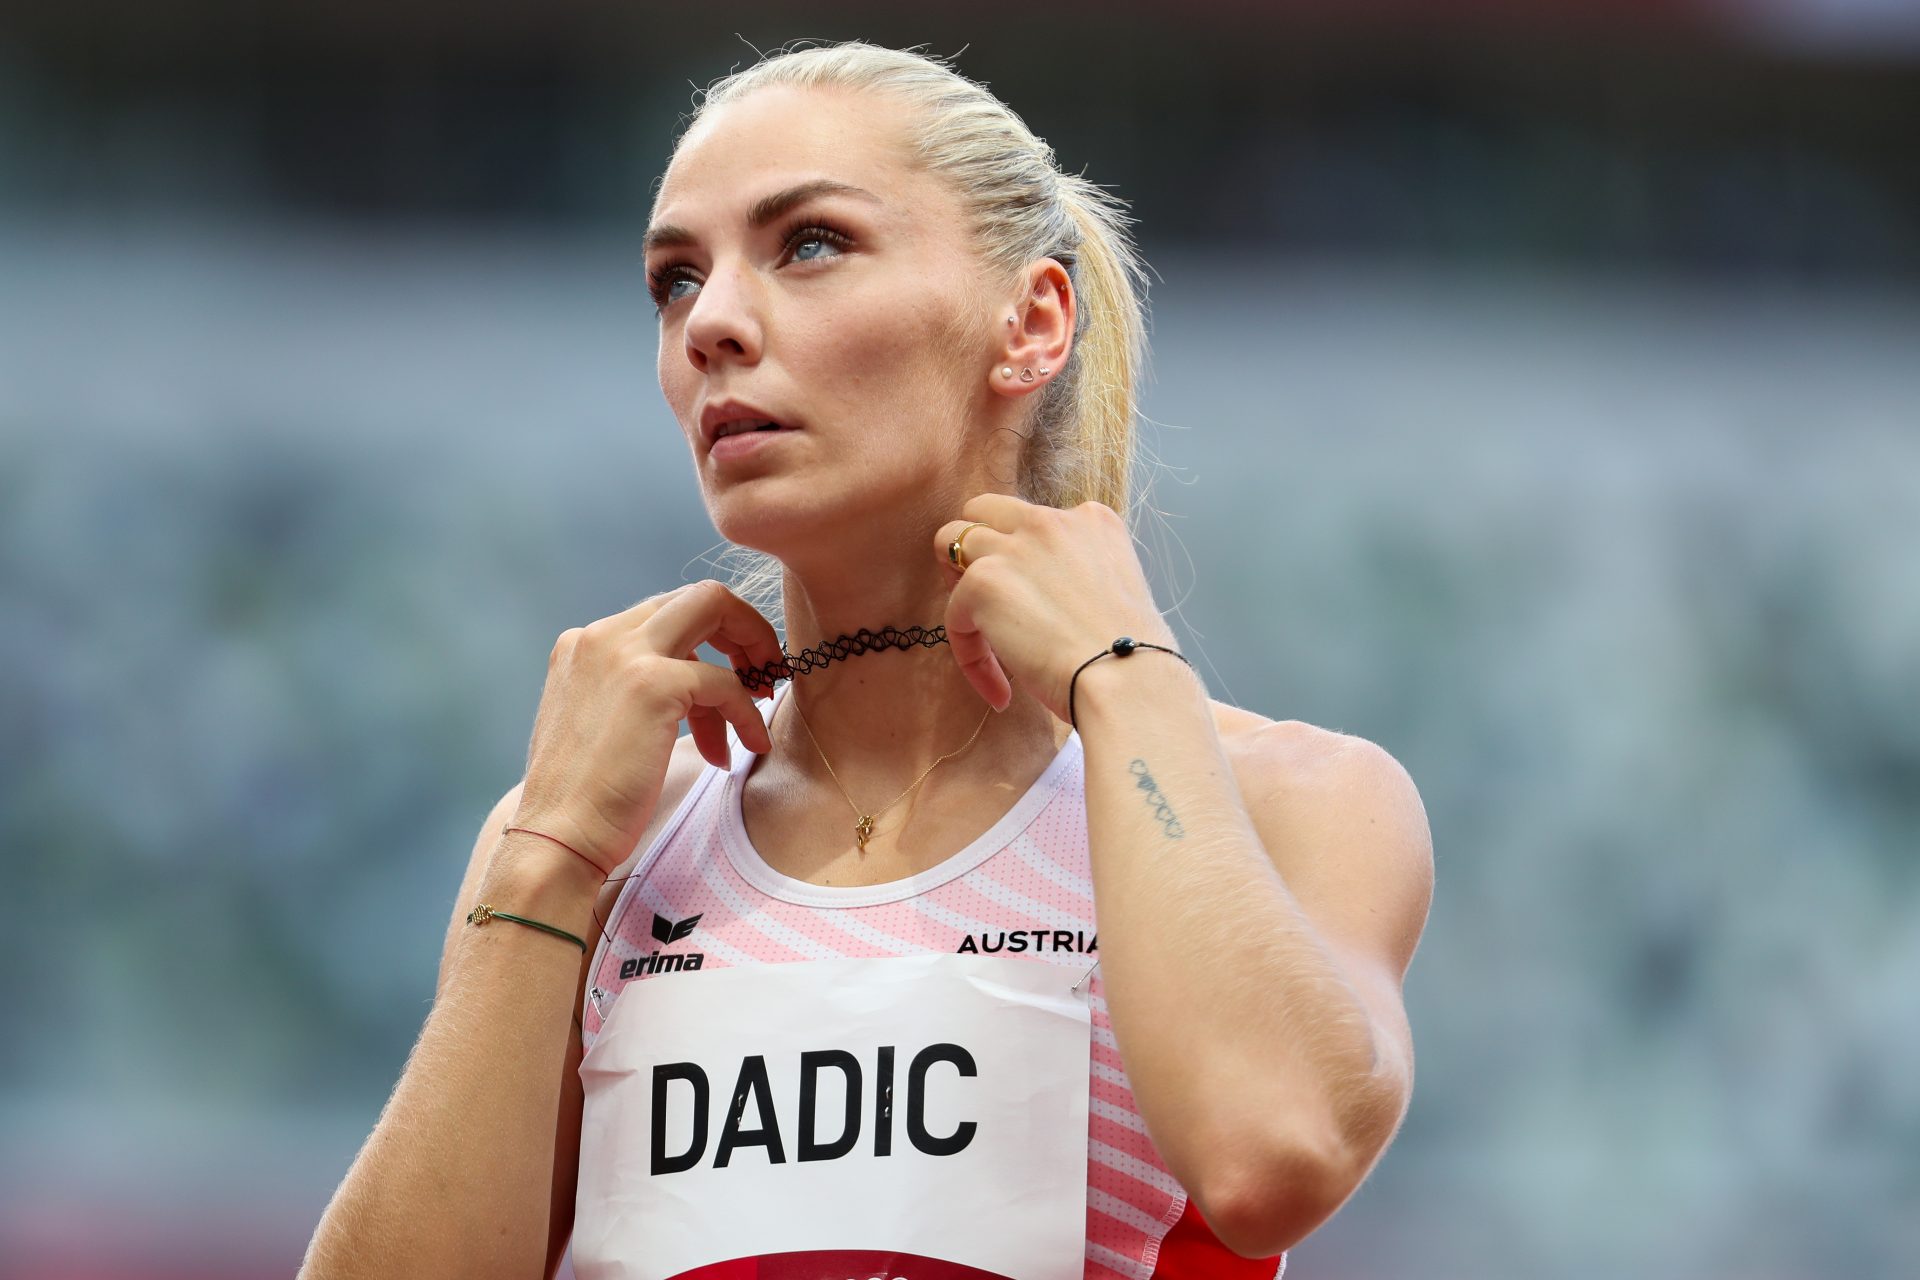 Meet Austrian heptathlon superstar Ivona Dadic